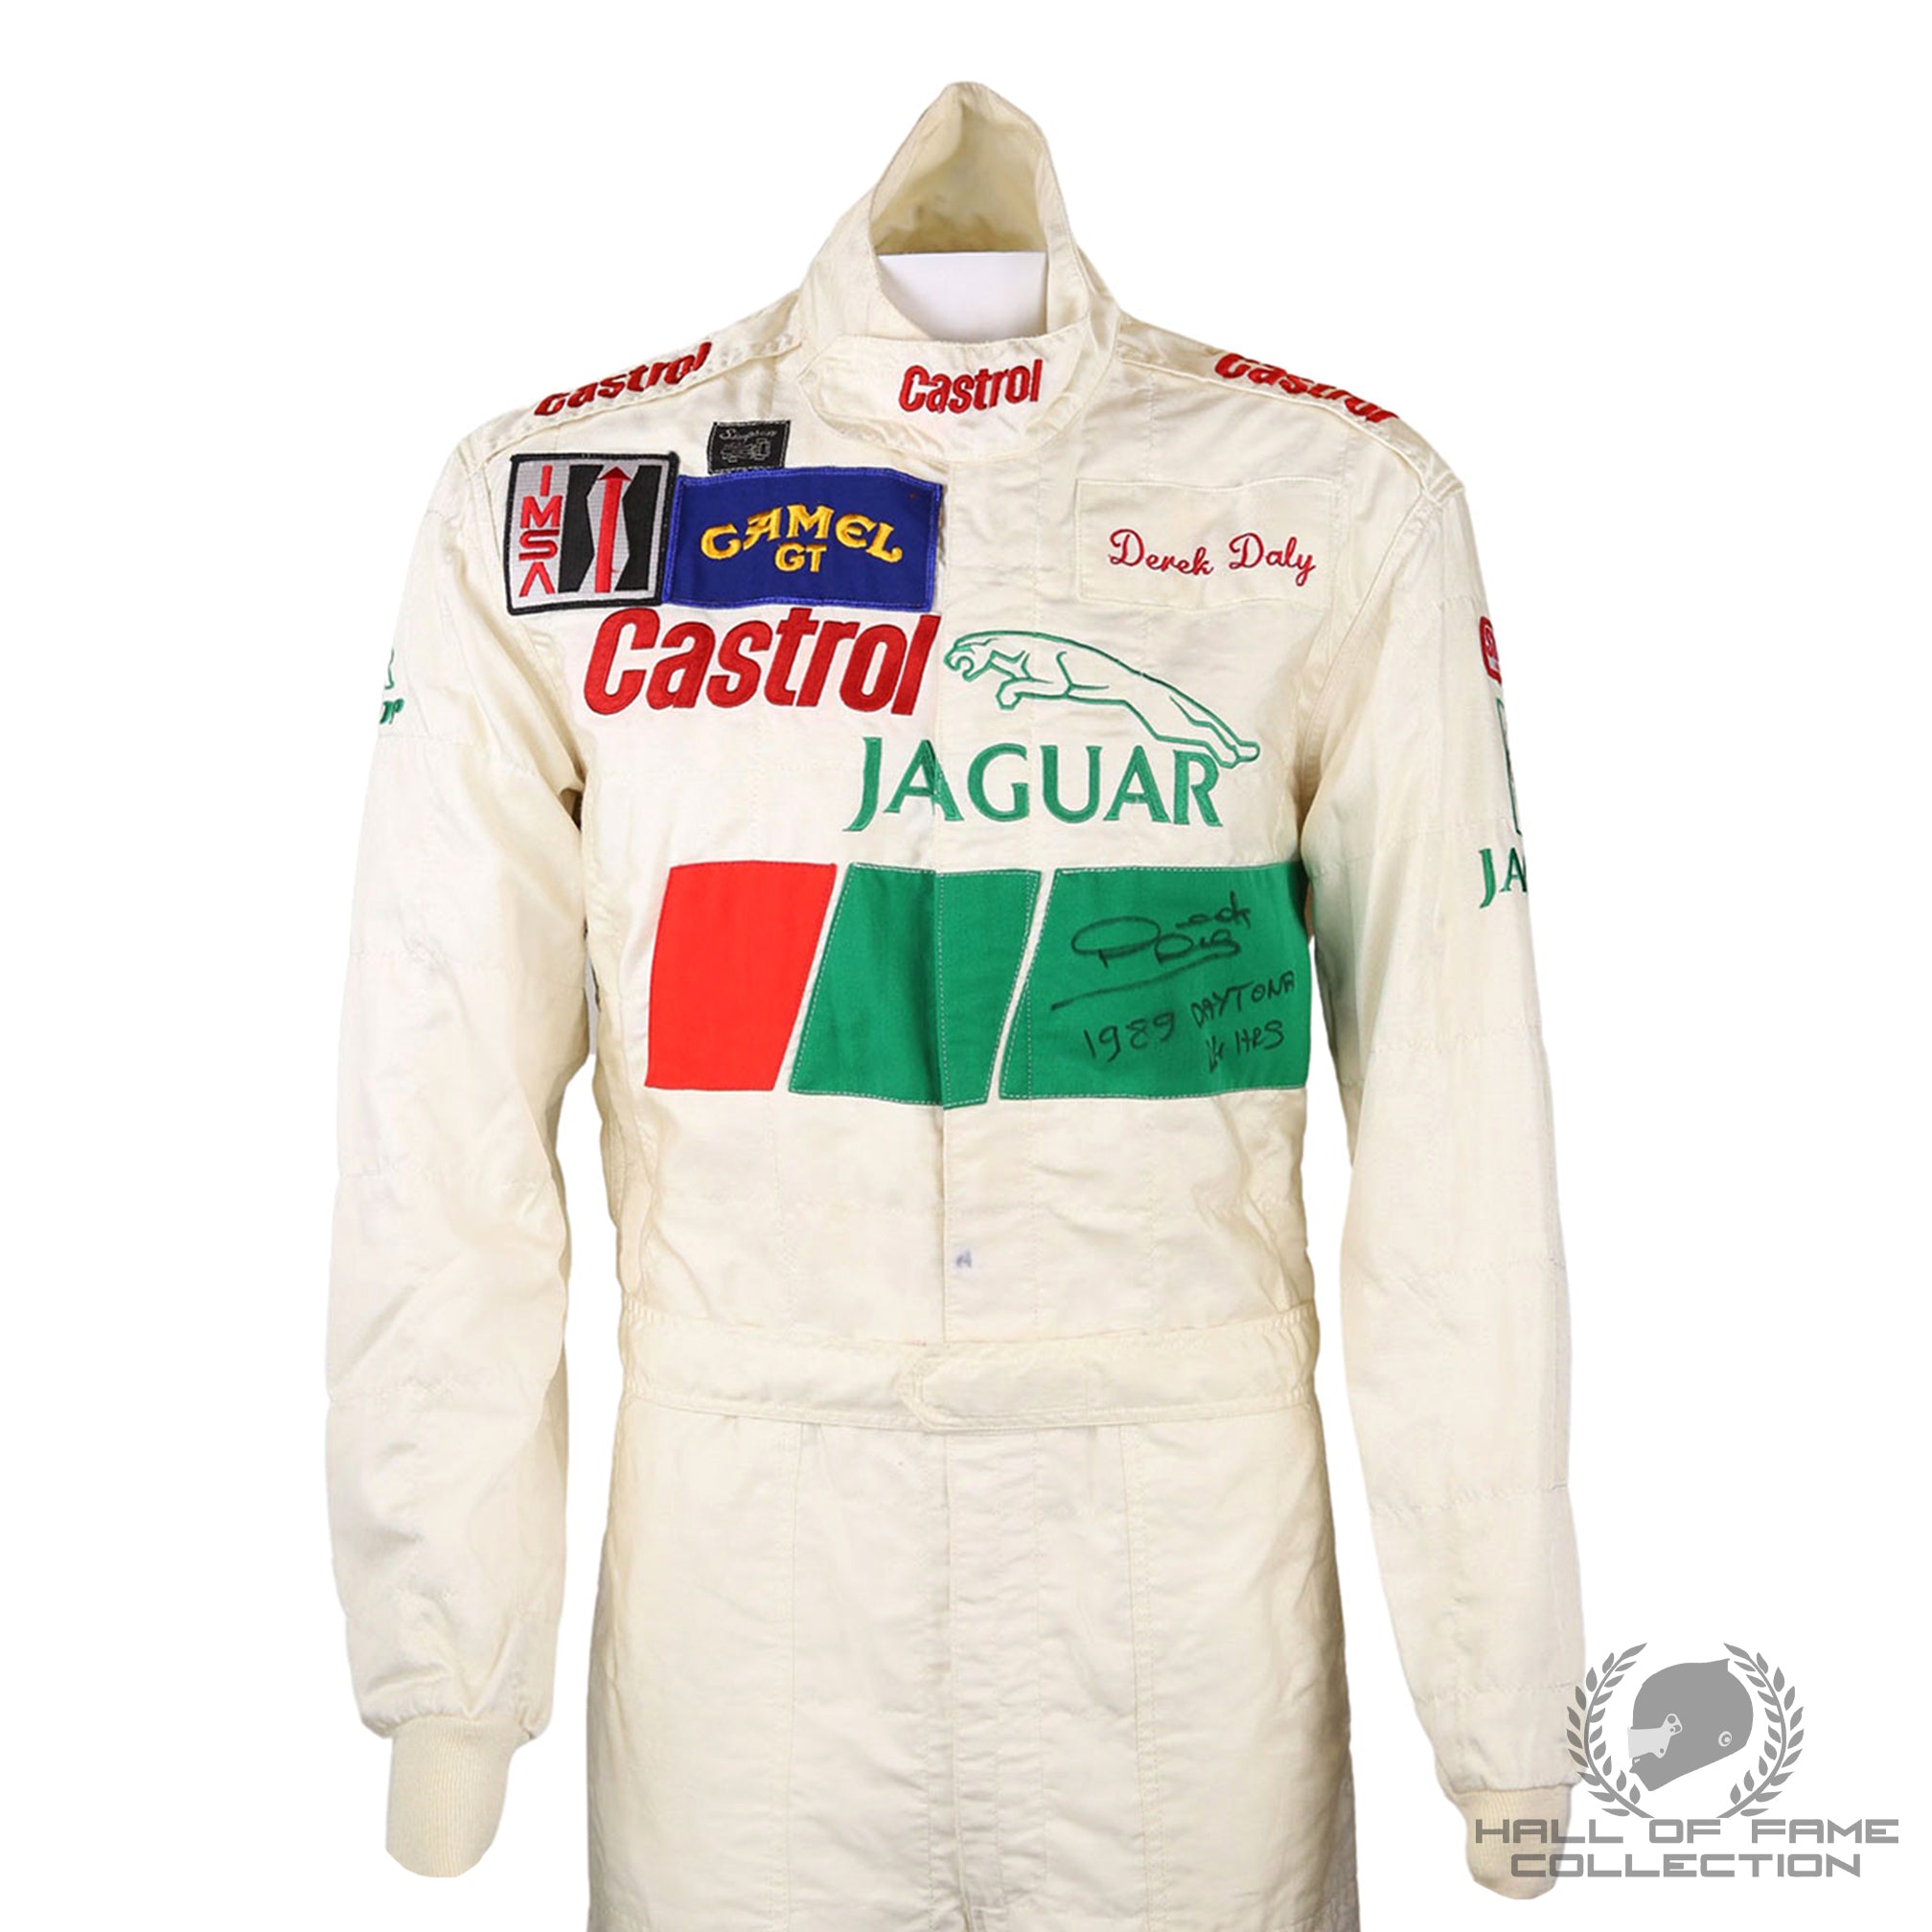 1989 Derek Daly Signed Daytona 24 hrs Race Used Castrol Jaguar Racing Sportscar Suit